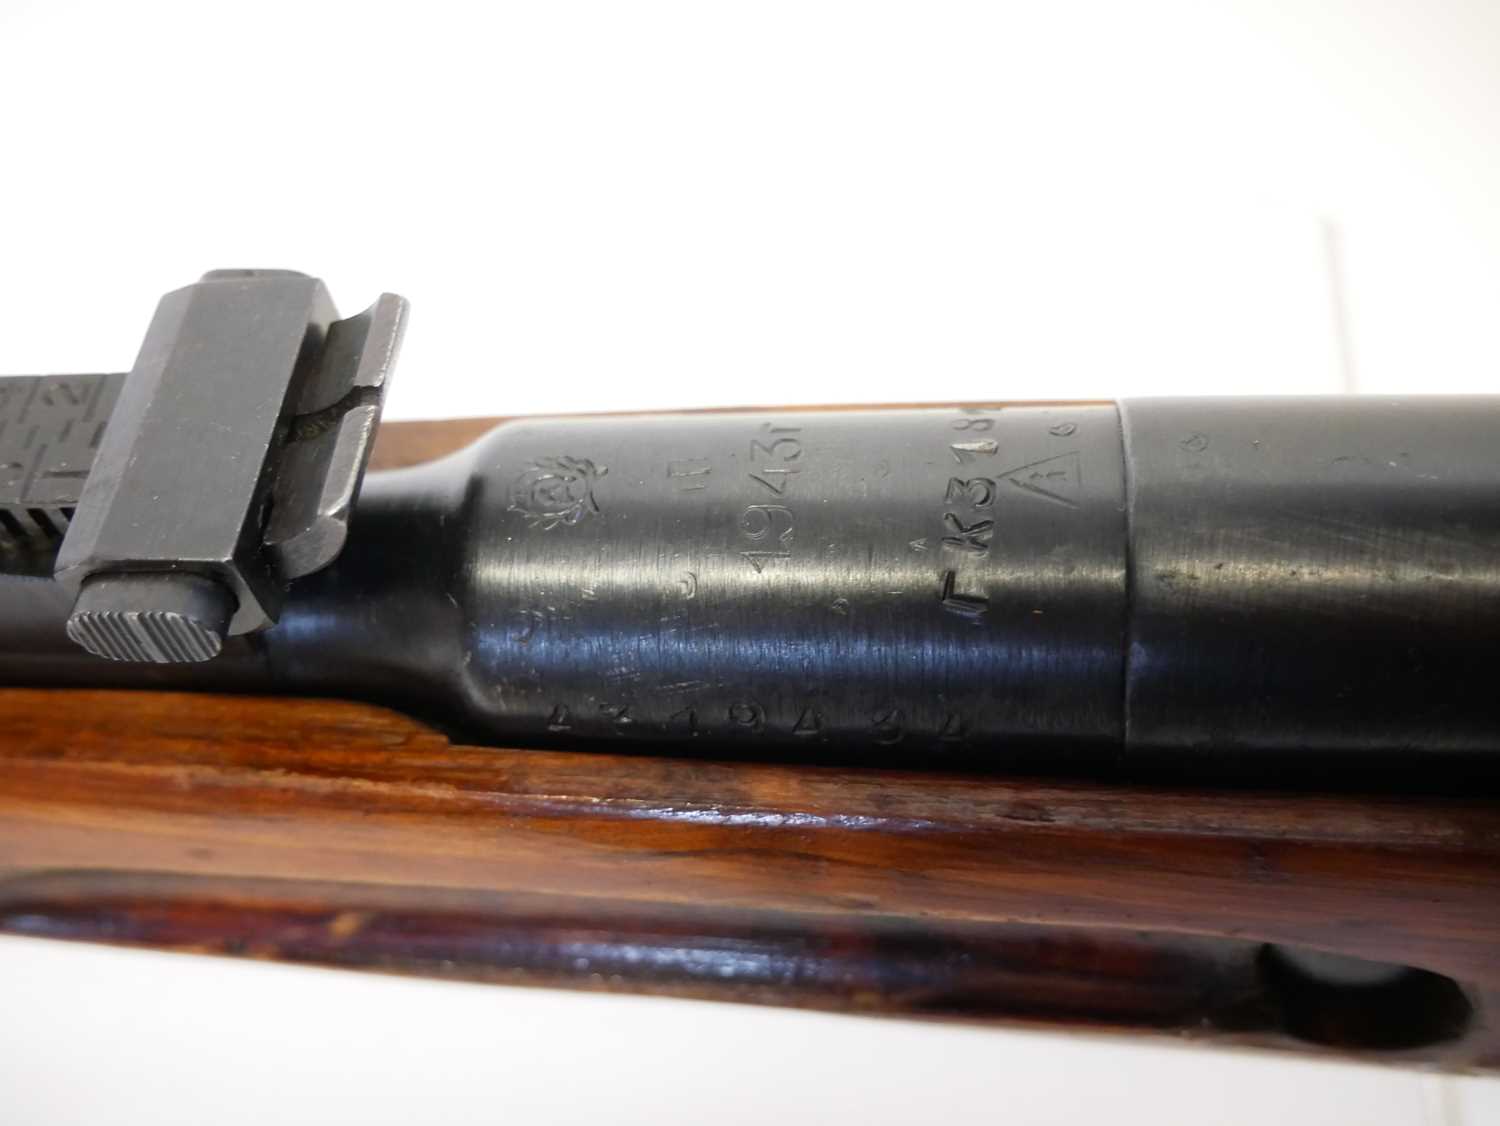 Izhevsk Mosin Nagant 7.62x54R bolt action rifle built up to be a sniper rifle, serial number K3181 - Image 17 of 19